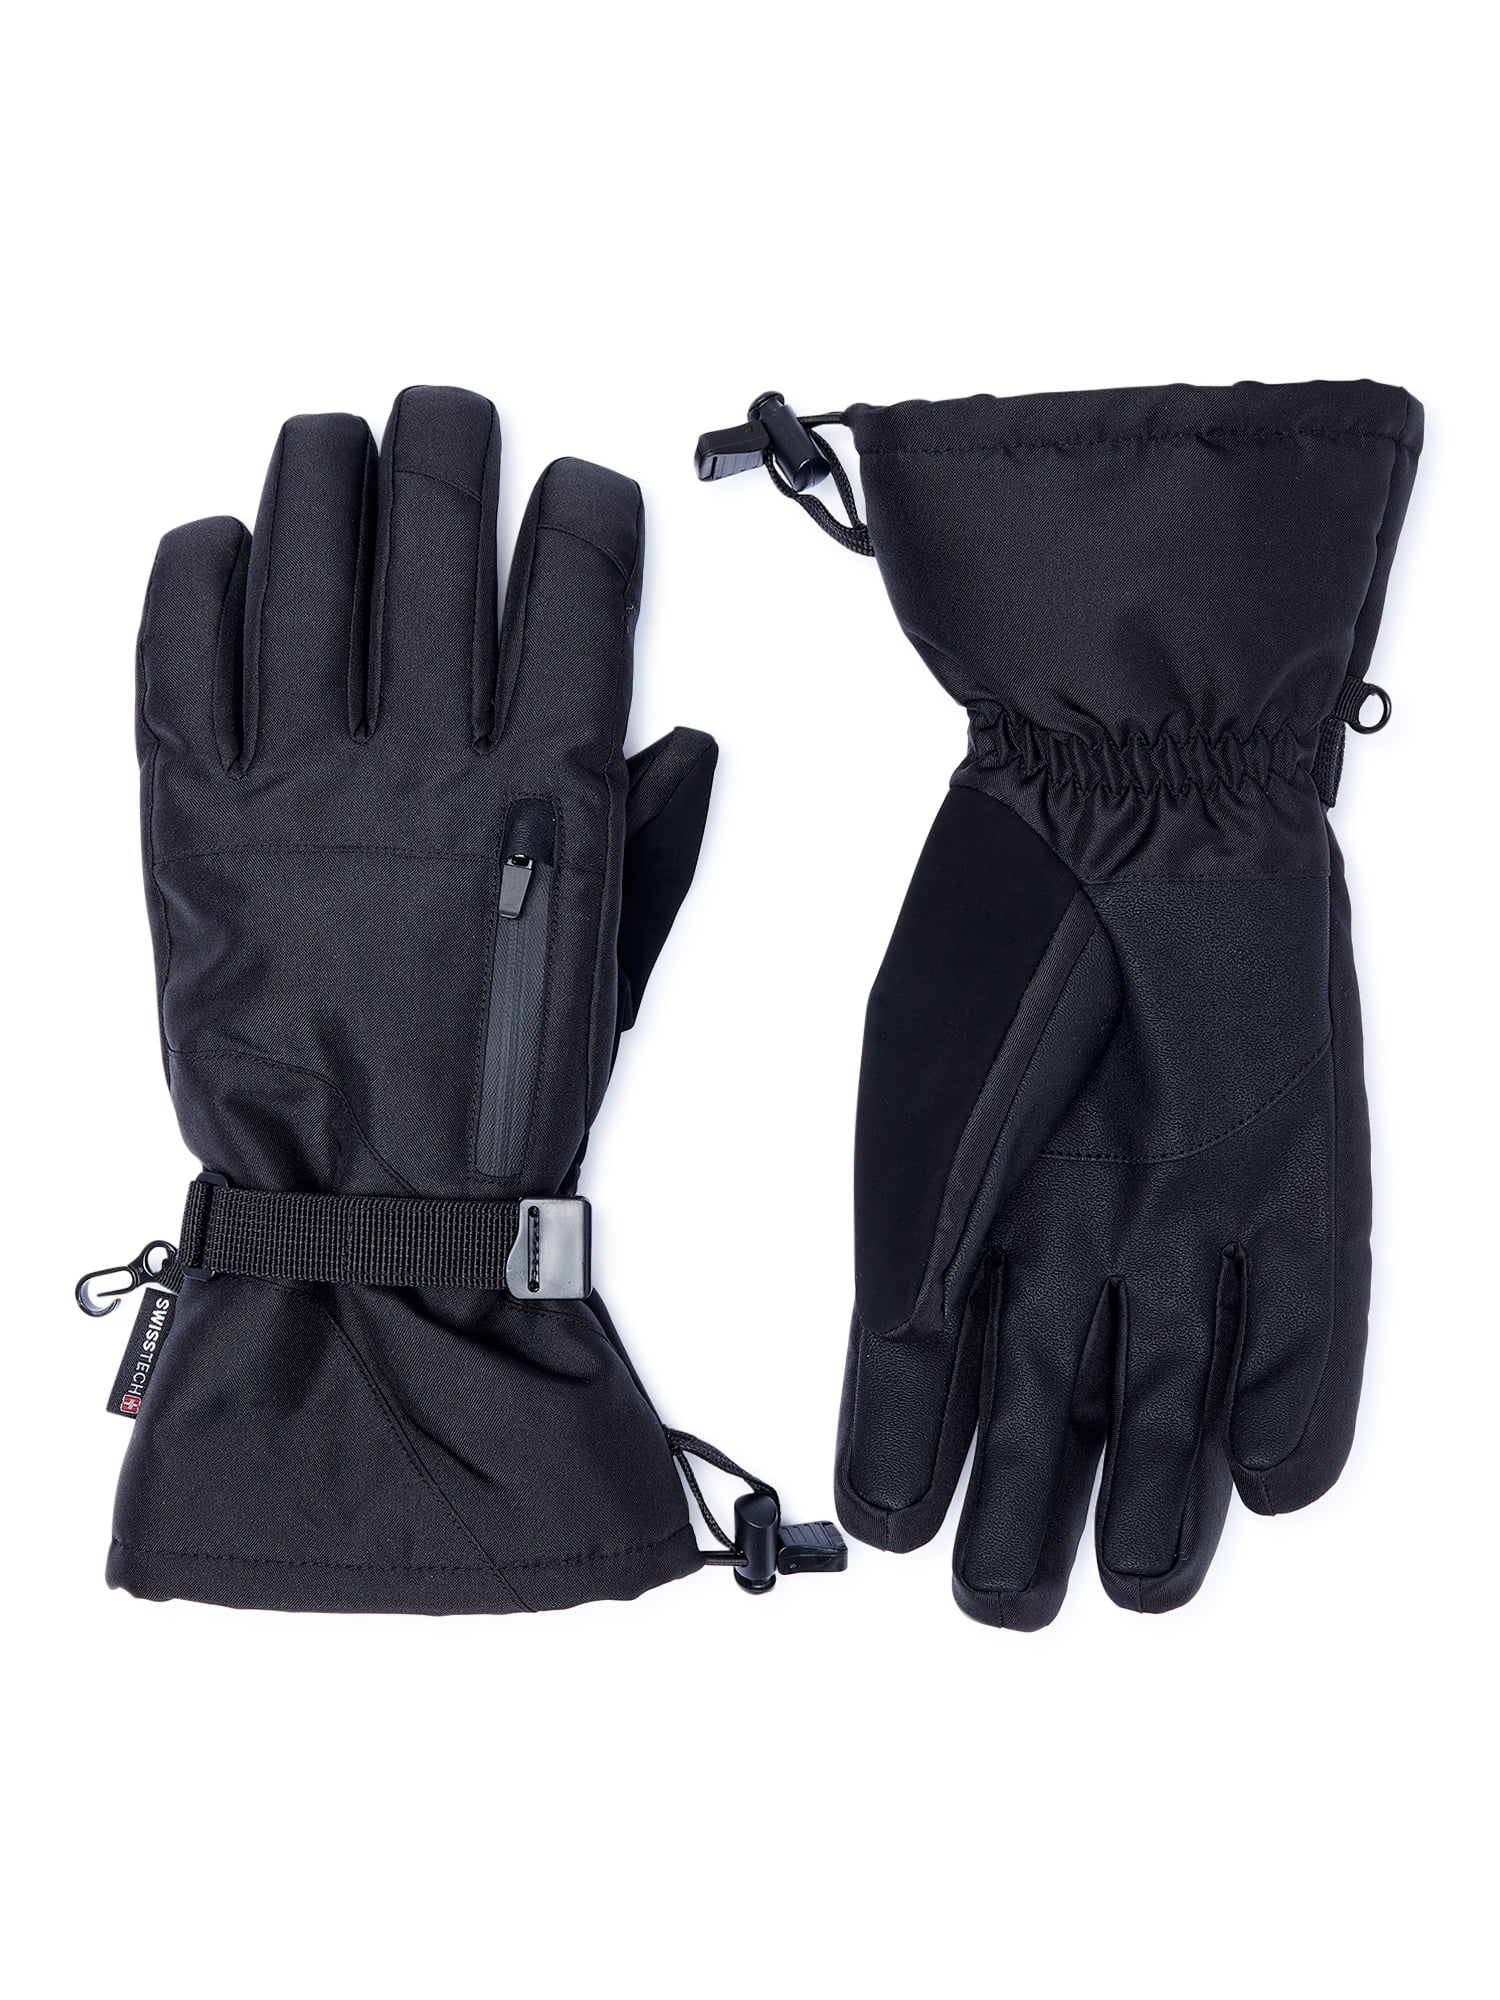 Swiss Tech Men's Premium Ski Gloves - Walmart.com